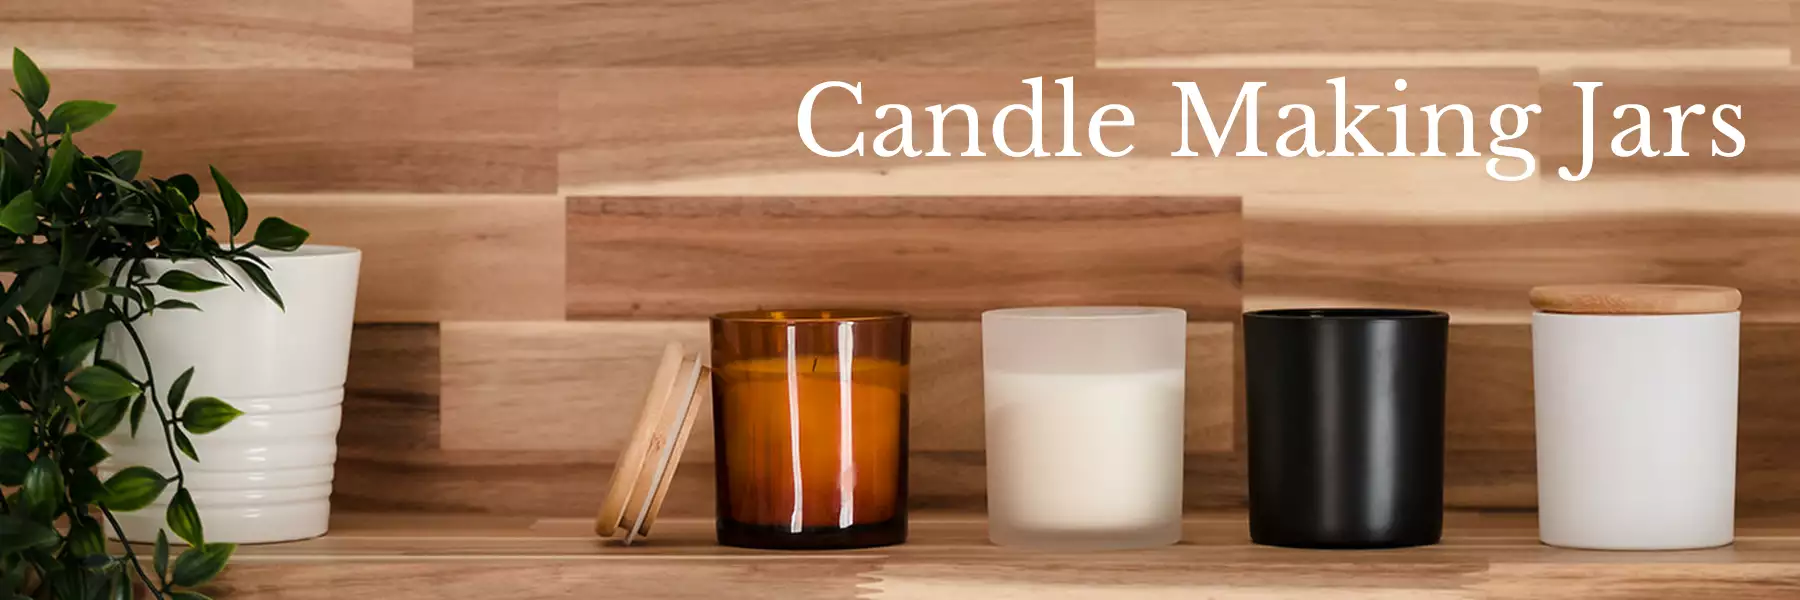 Candle Making Jars